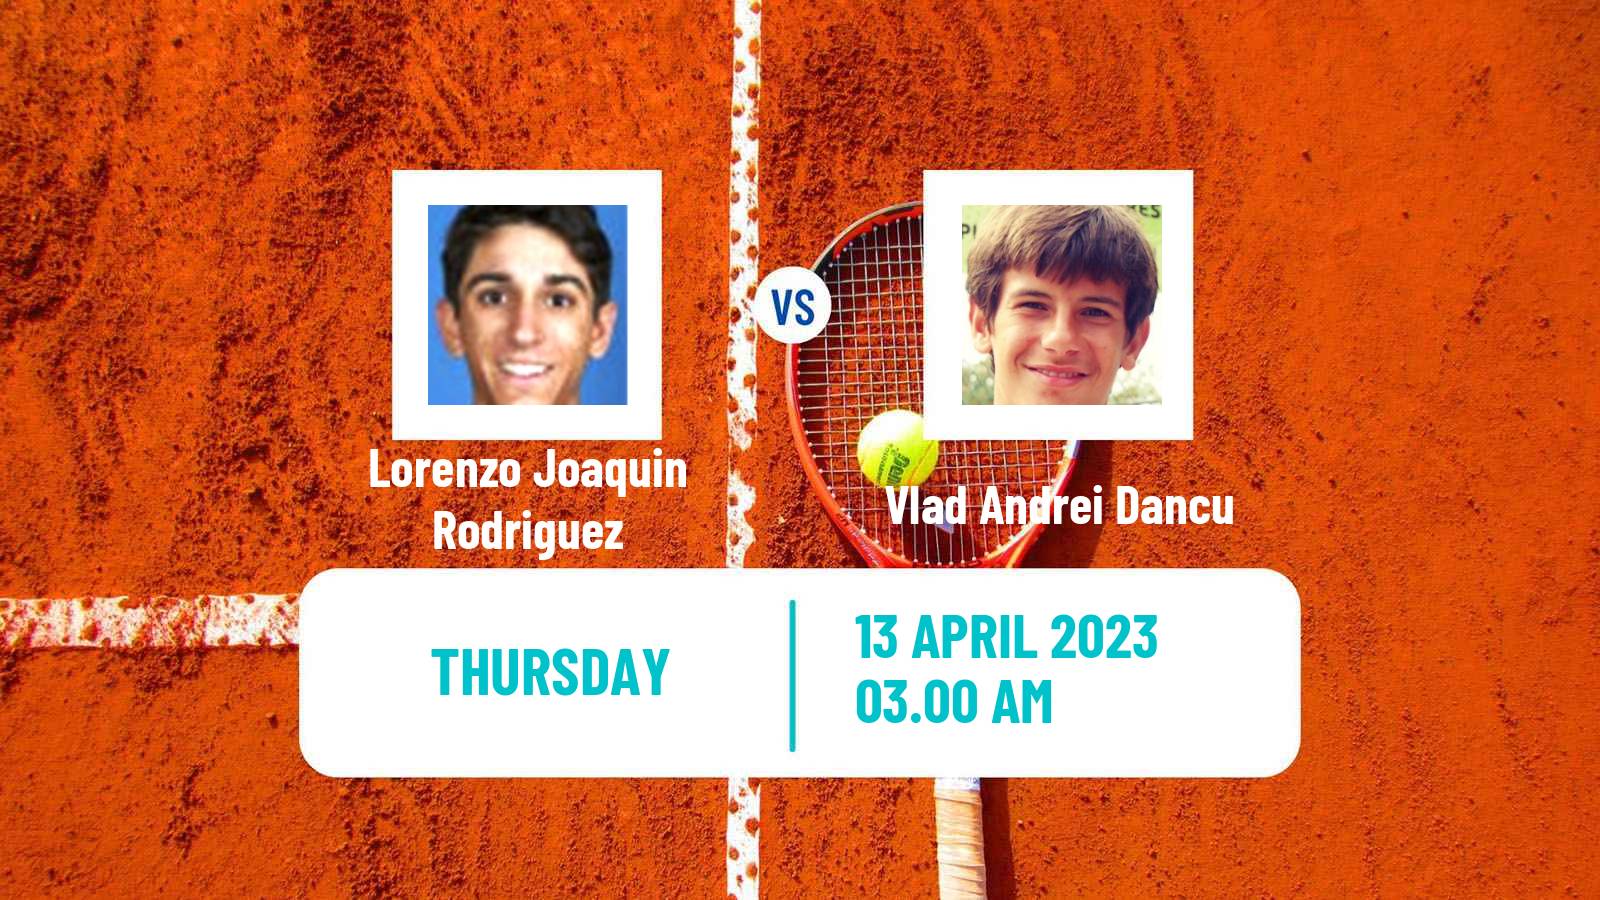 Tennis ITF Tournaments Lorenzo Joaquin Rodriguez - Vlad Andrei Dancu